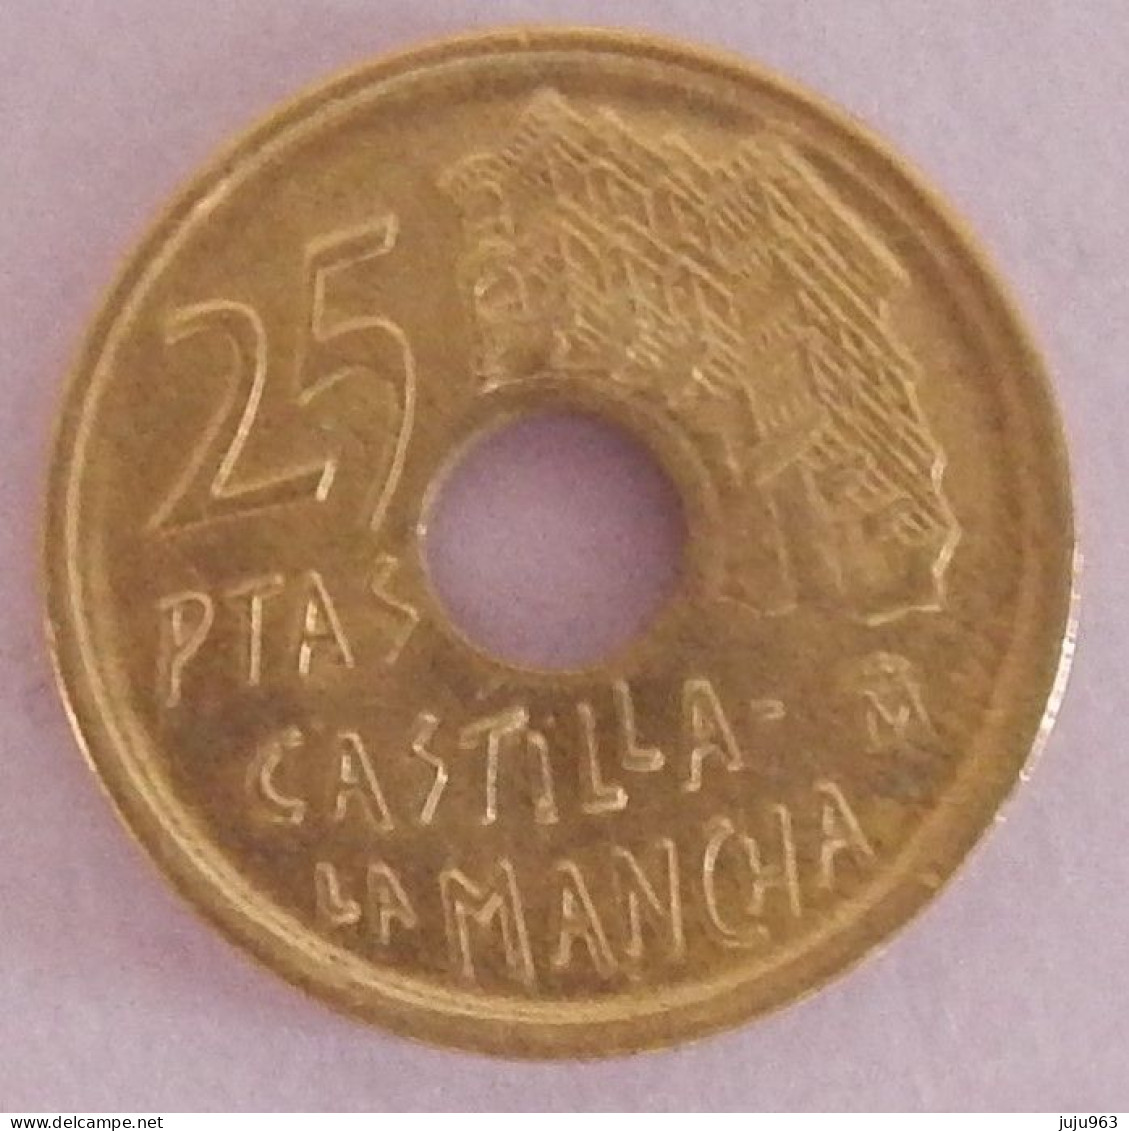 ESPAGNE 25 PESETAS CASTILLA  DE LA MANCHA  ANNEE 1996 VOIR 2 SCANS - 25 Pesetas